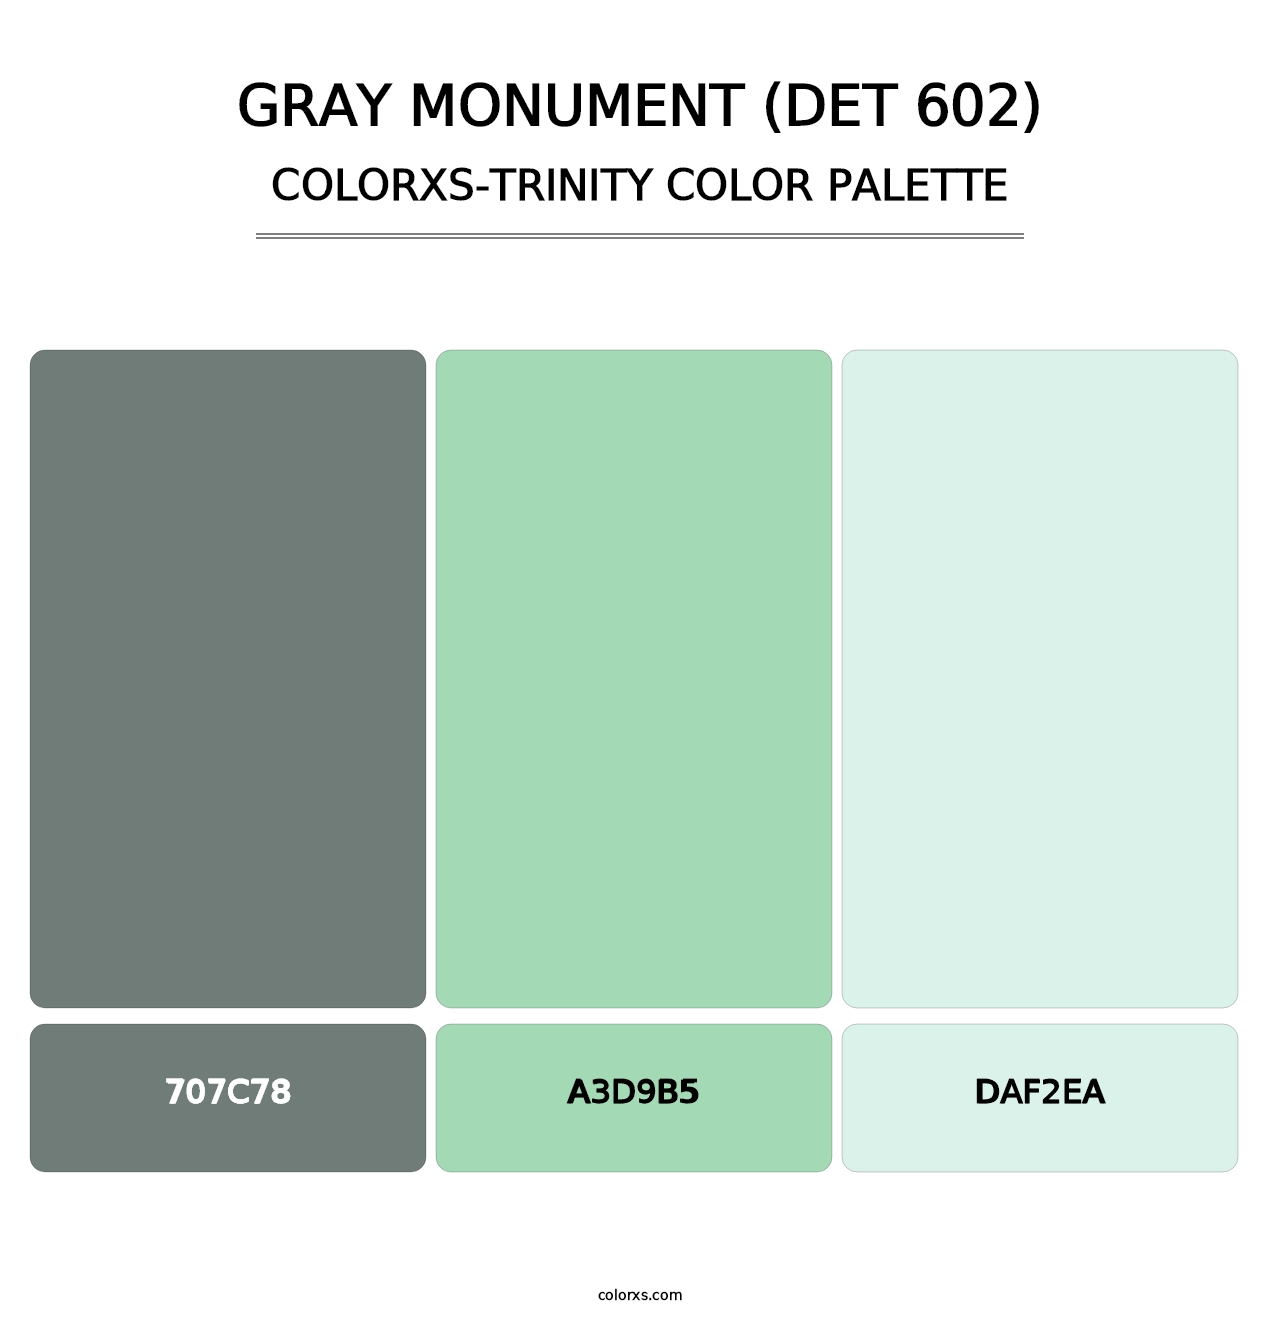 Gray Monument (DET 602) - Colorxs Trinity Palette